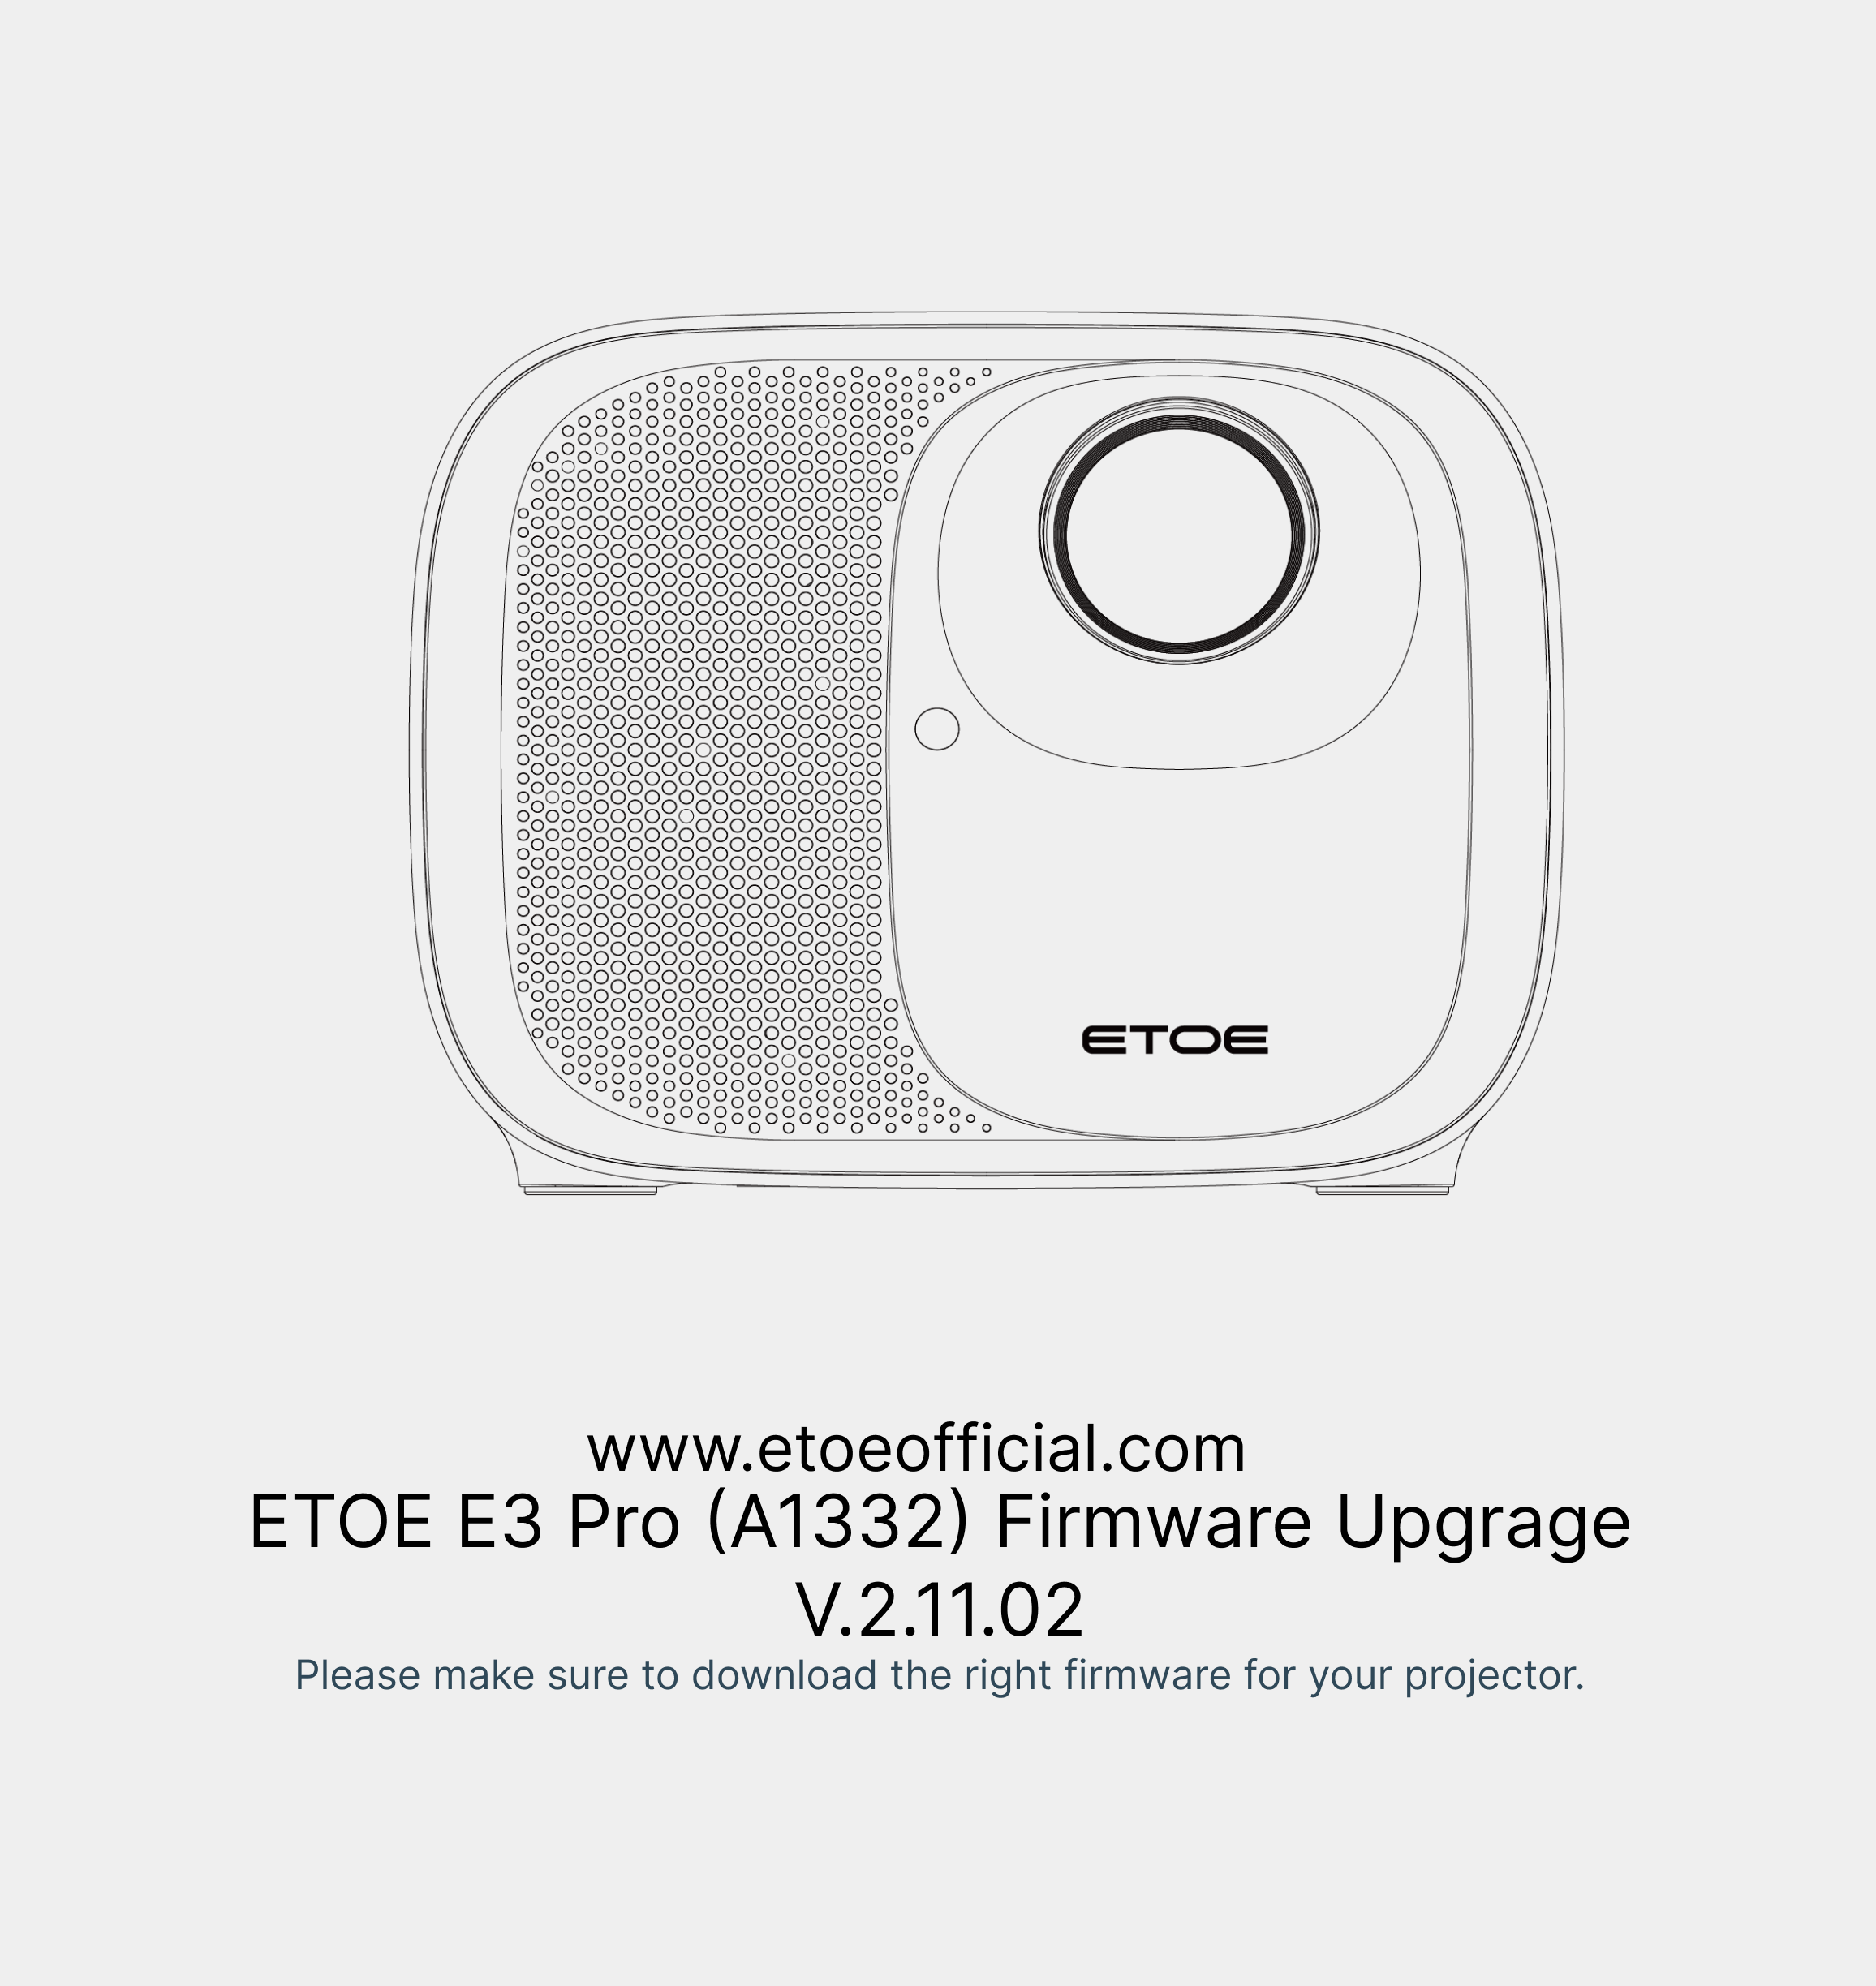 ETOE E3 Pro Firmware